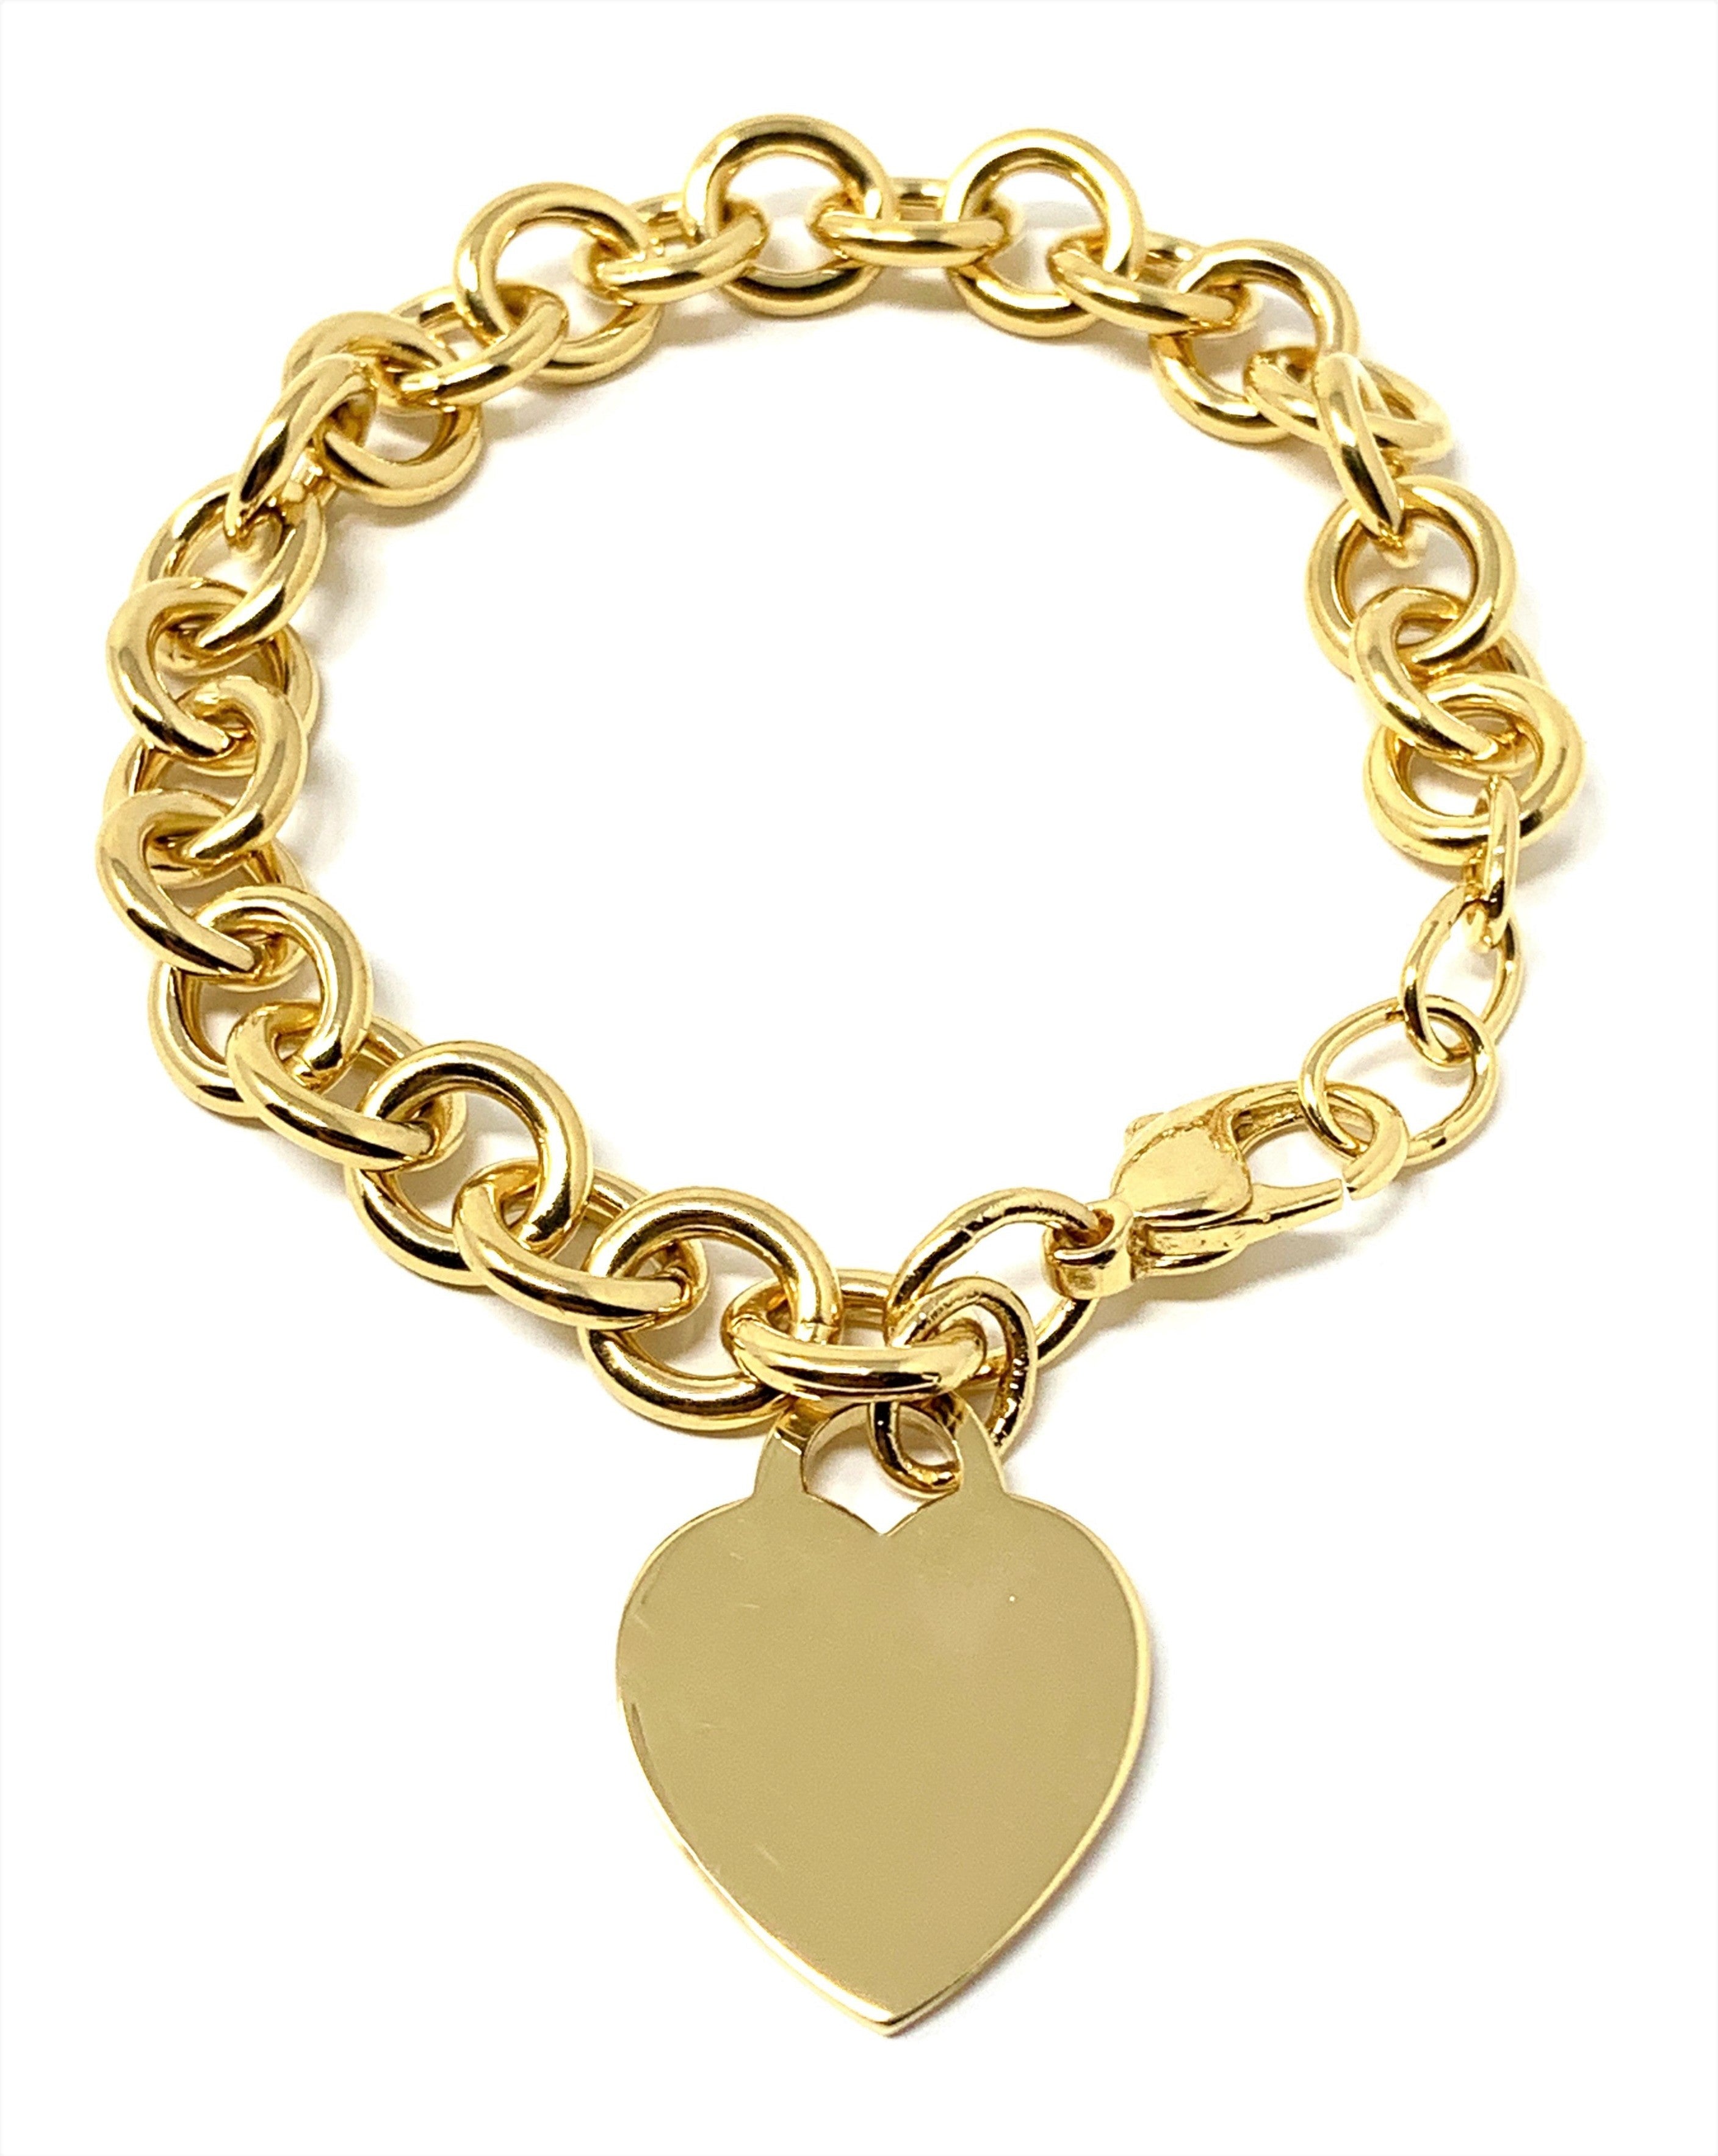 14K Yellow Gold Heart Charm Hollow Bracelet - 7.25